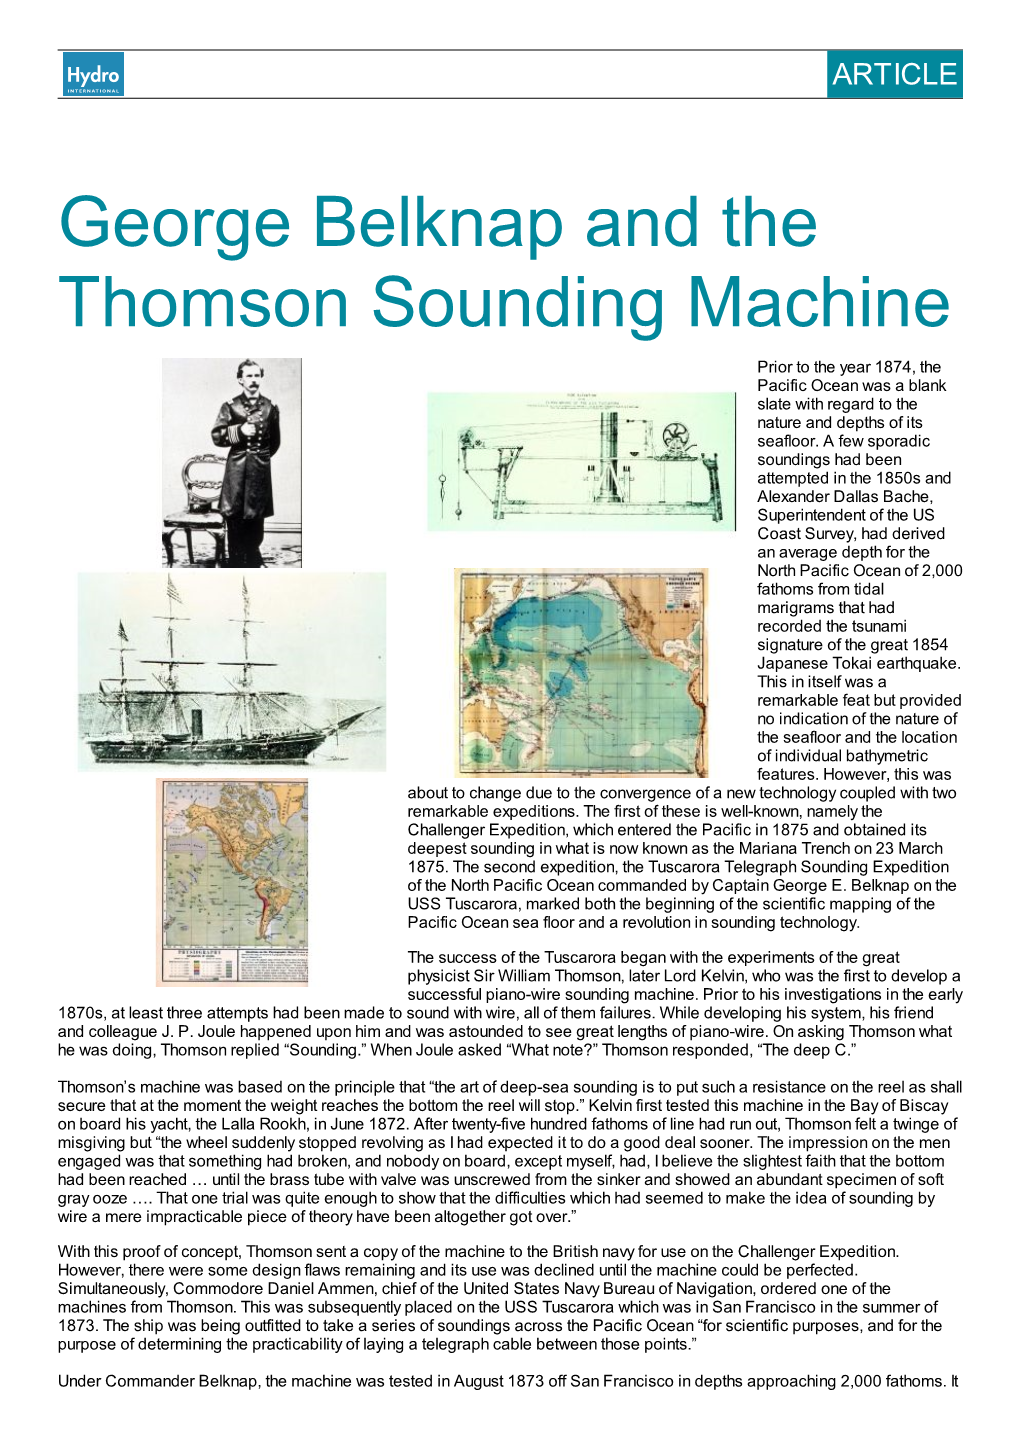 George Belknap and the Thomson Sounding Machine